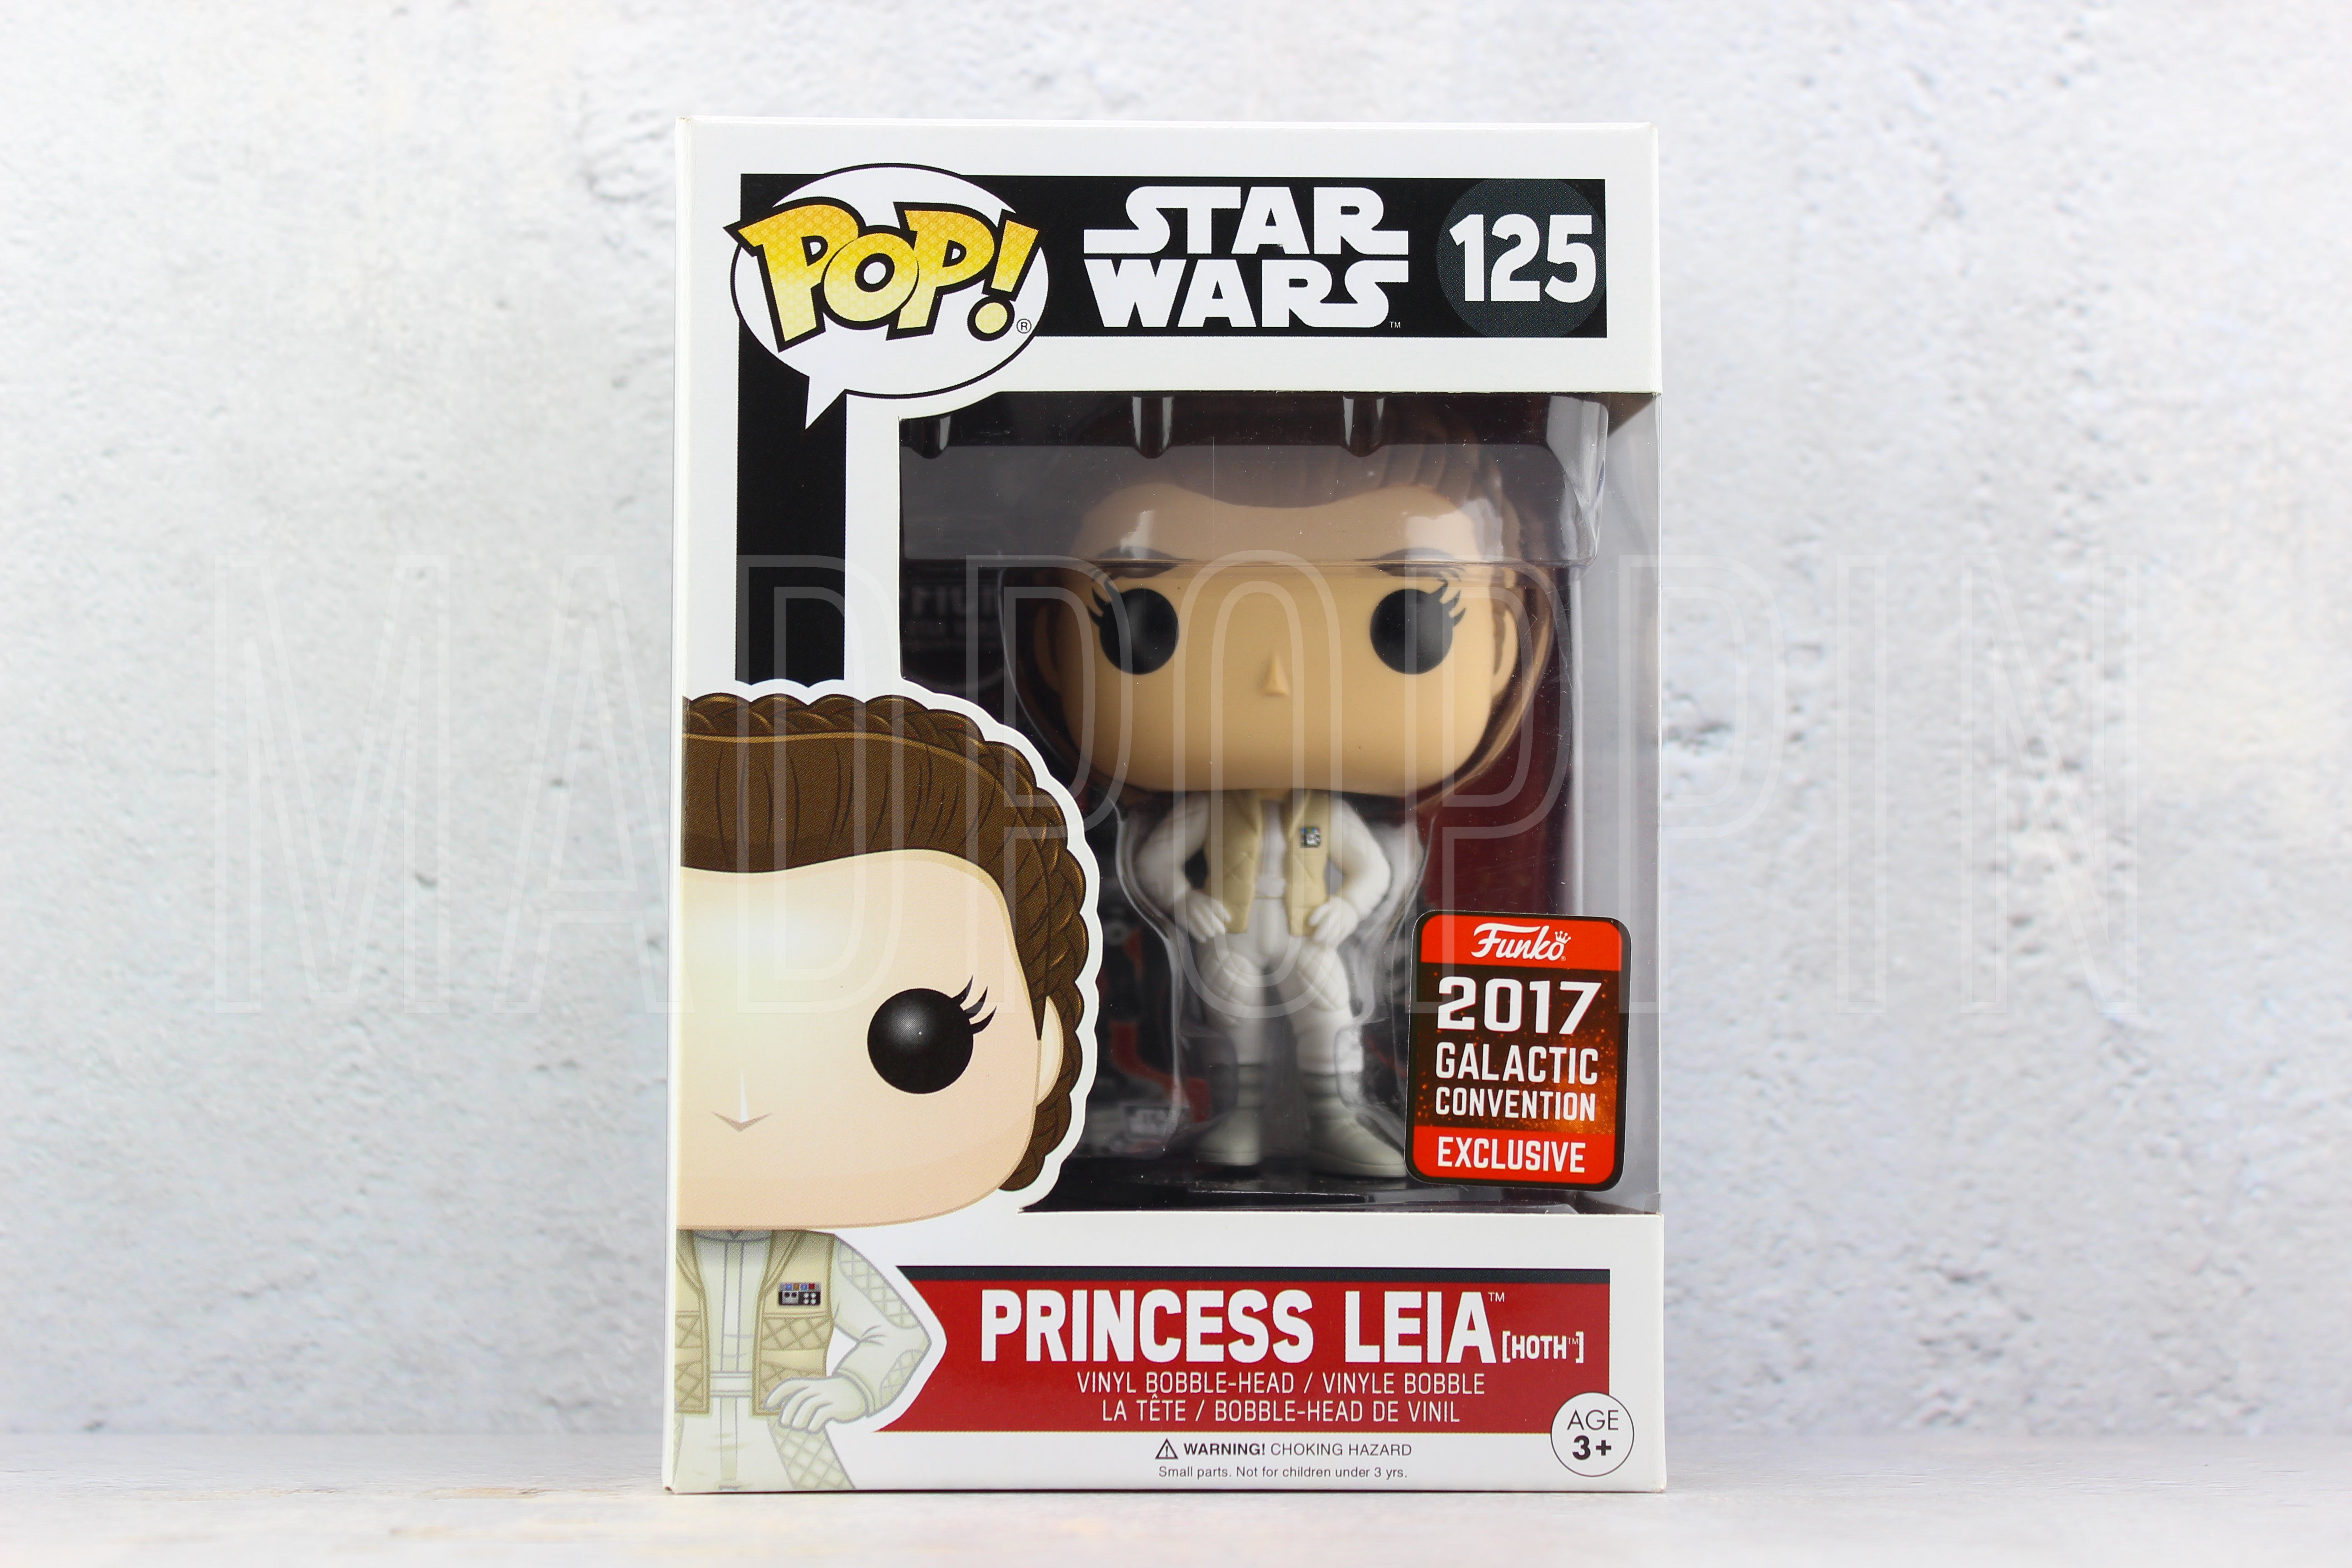 POP! Star Wars: Star Wars - Princess Leia [Hoth]